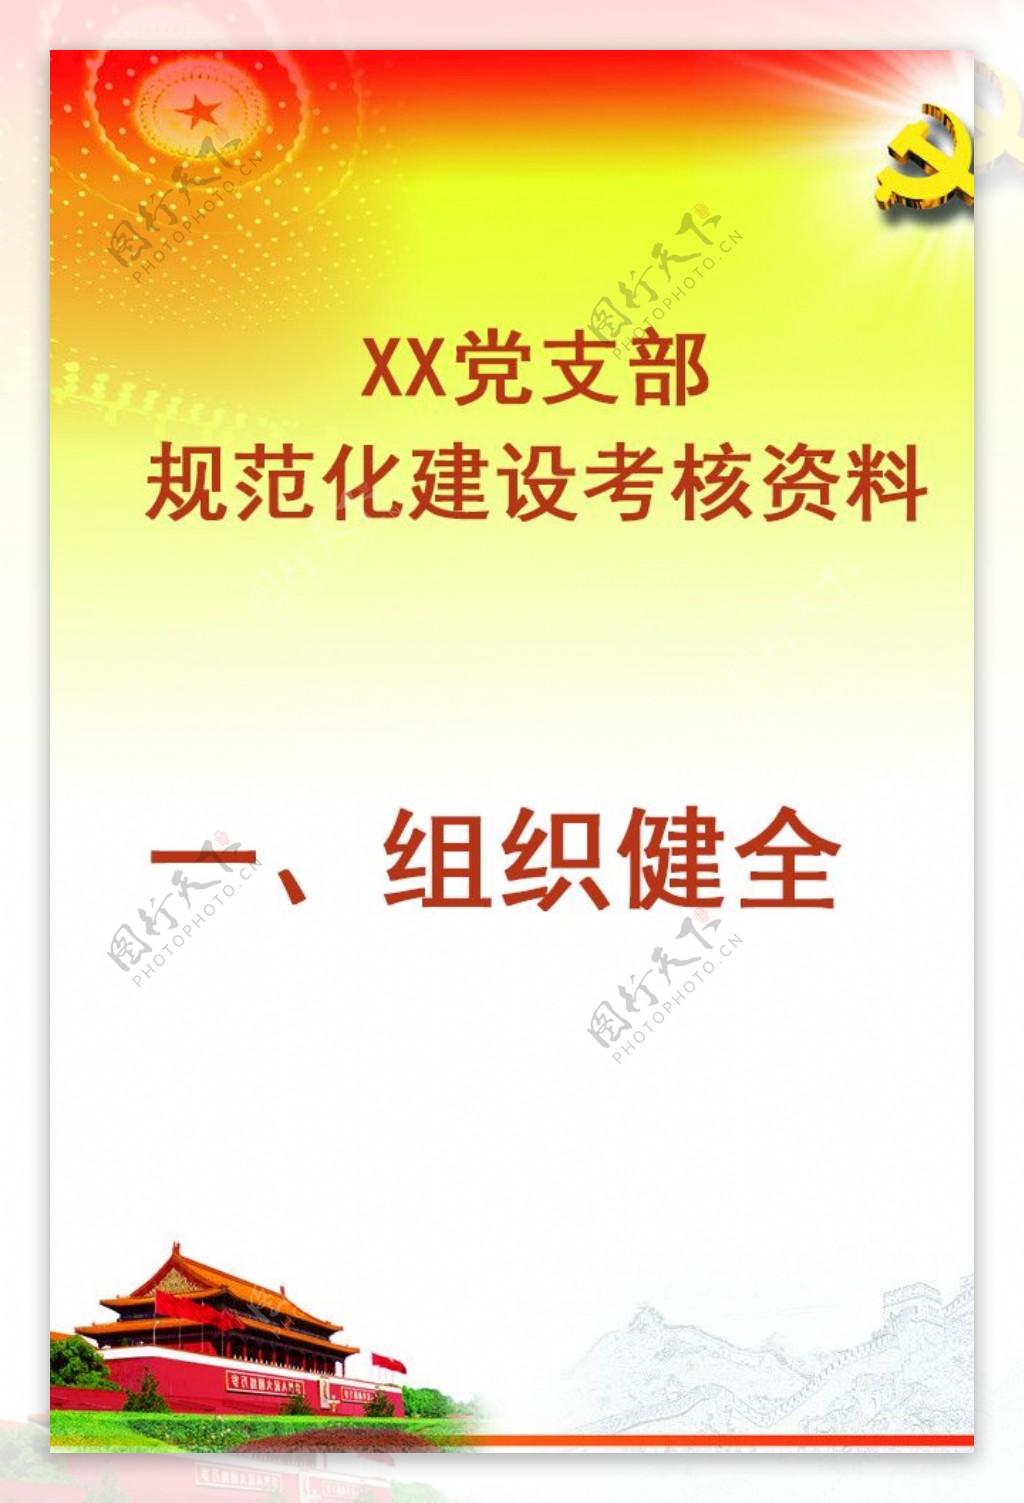 XX党支部规范化建设资料封面